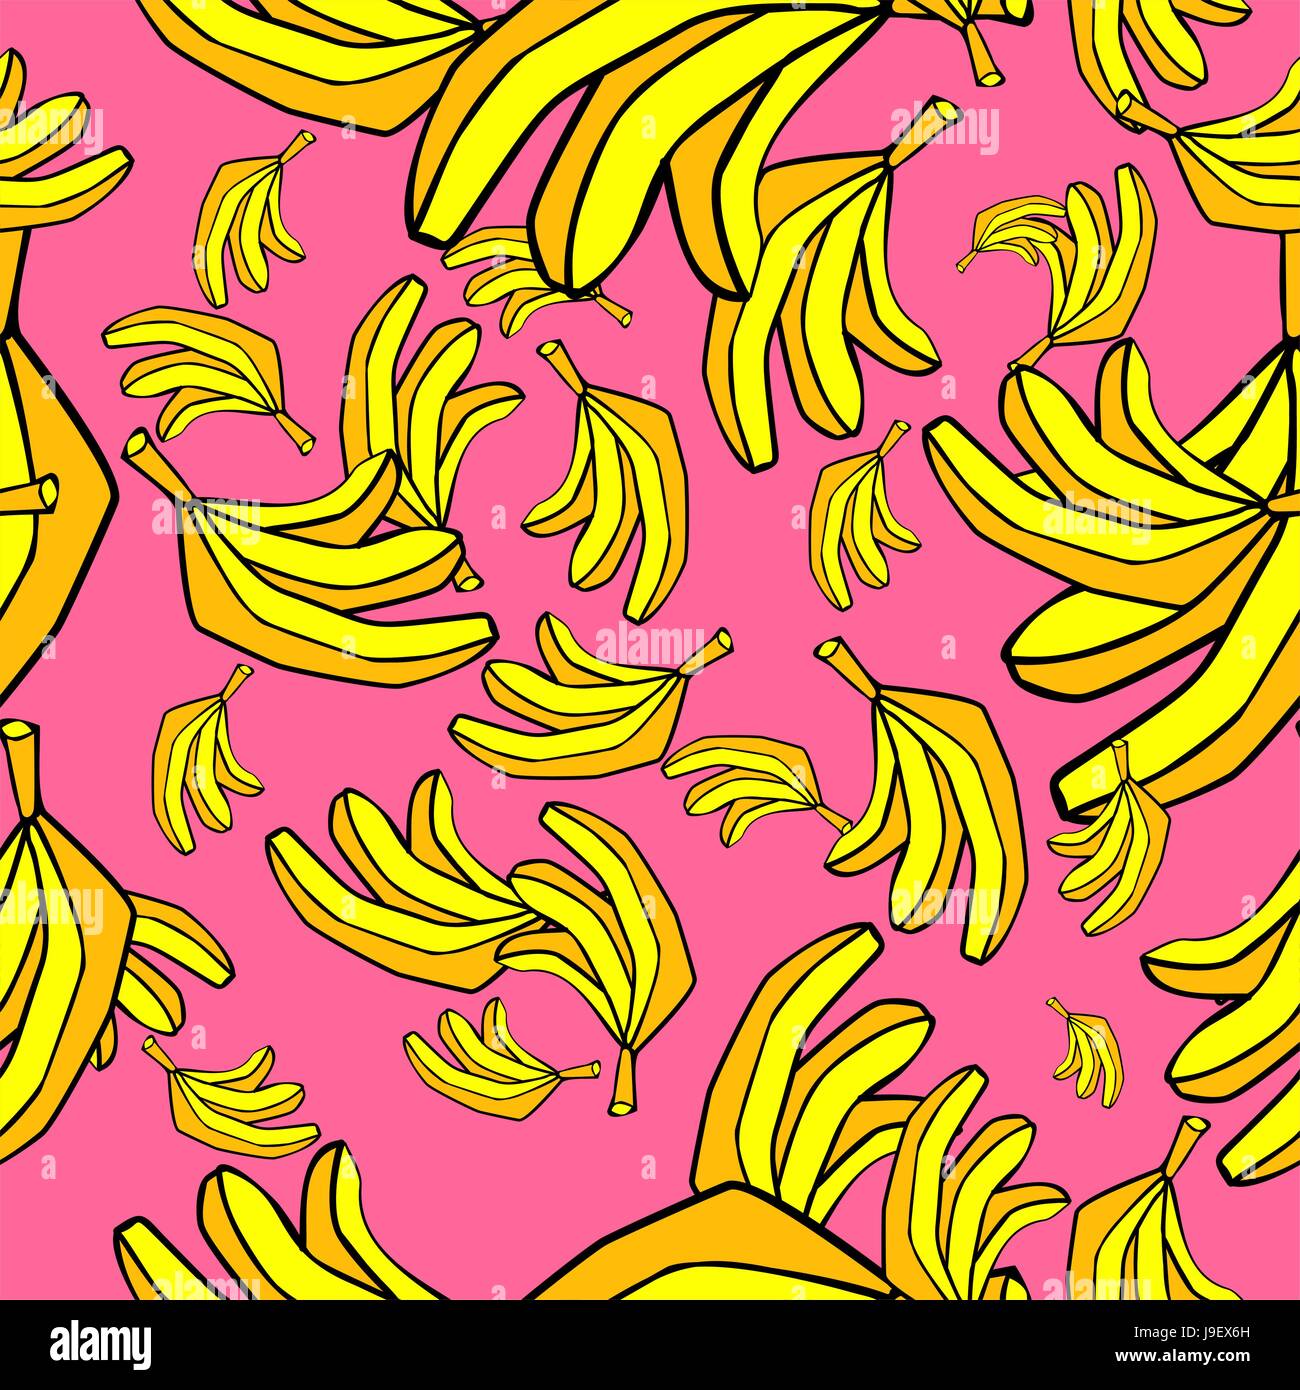 https://c8.alamy.com/comp/J9EX6H/bananas-seamless-pattern-background-cartoon-cheerful-bananas-sweet-J9EX6H.jpg